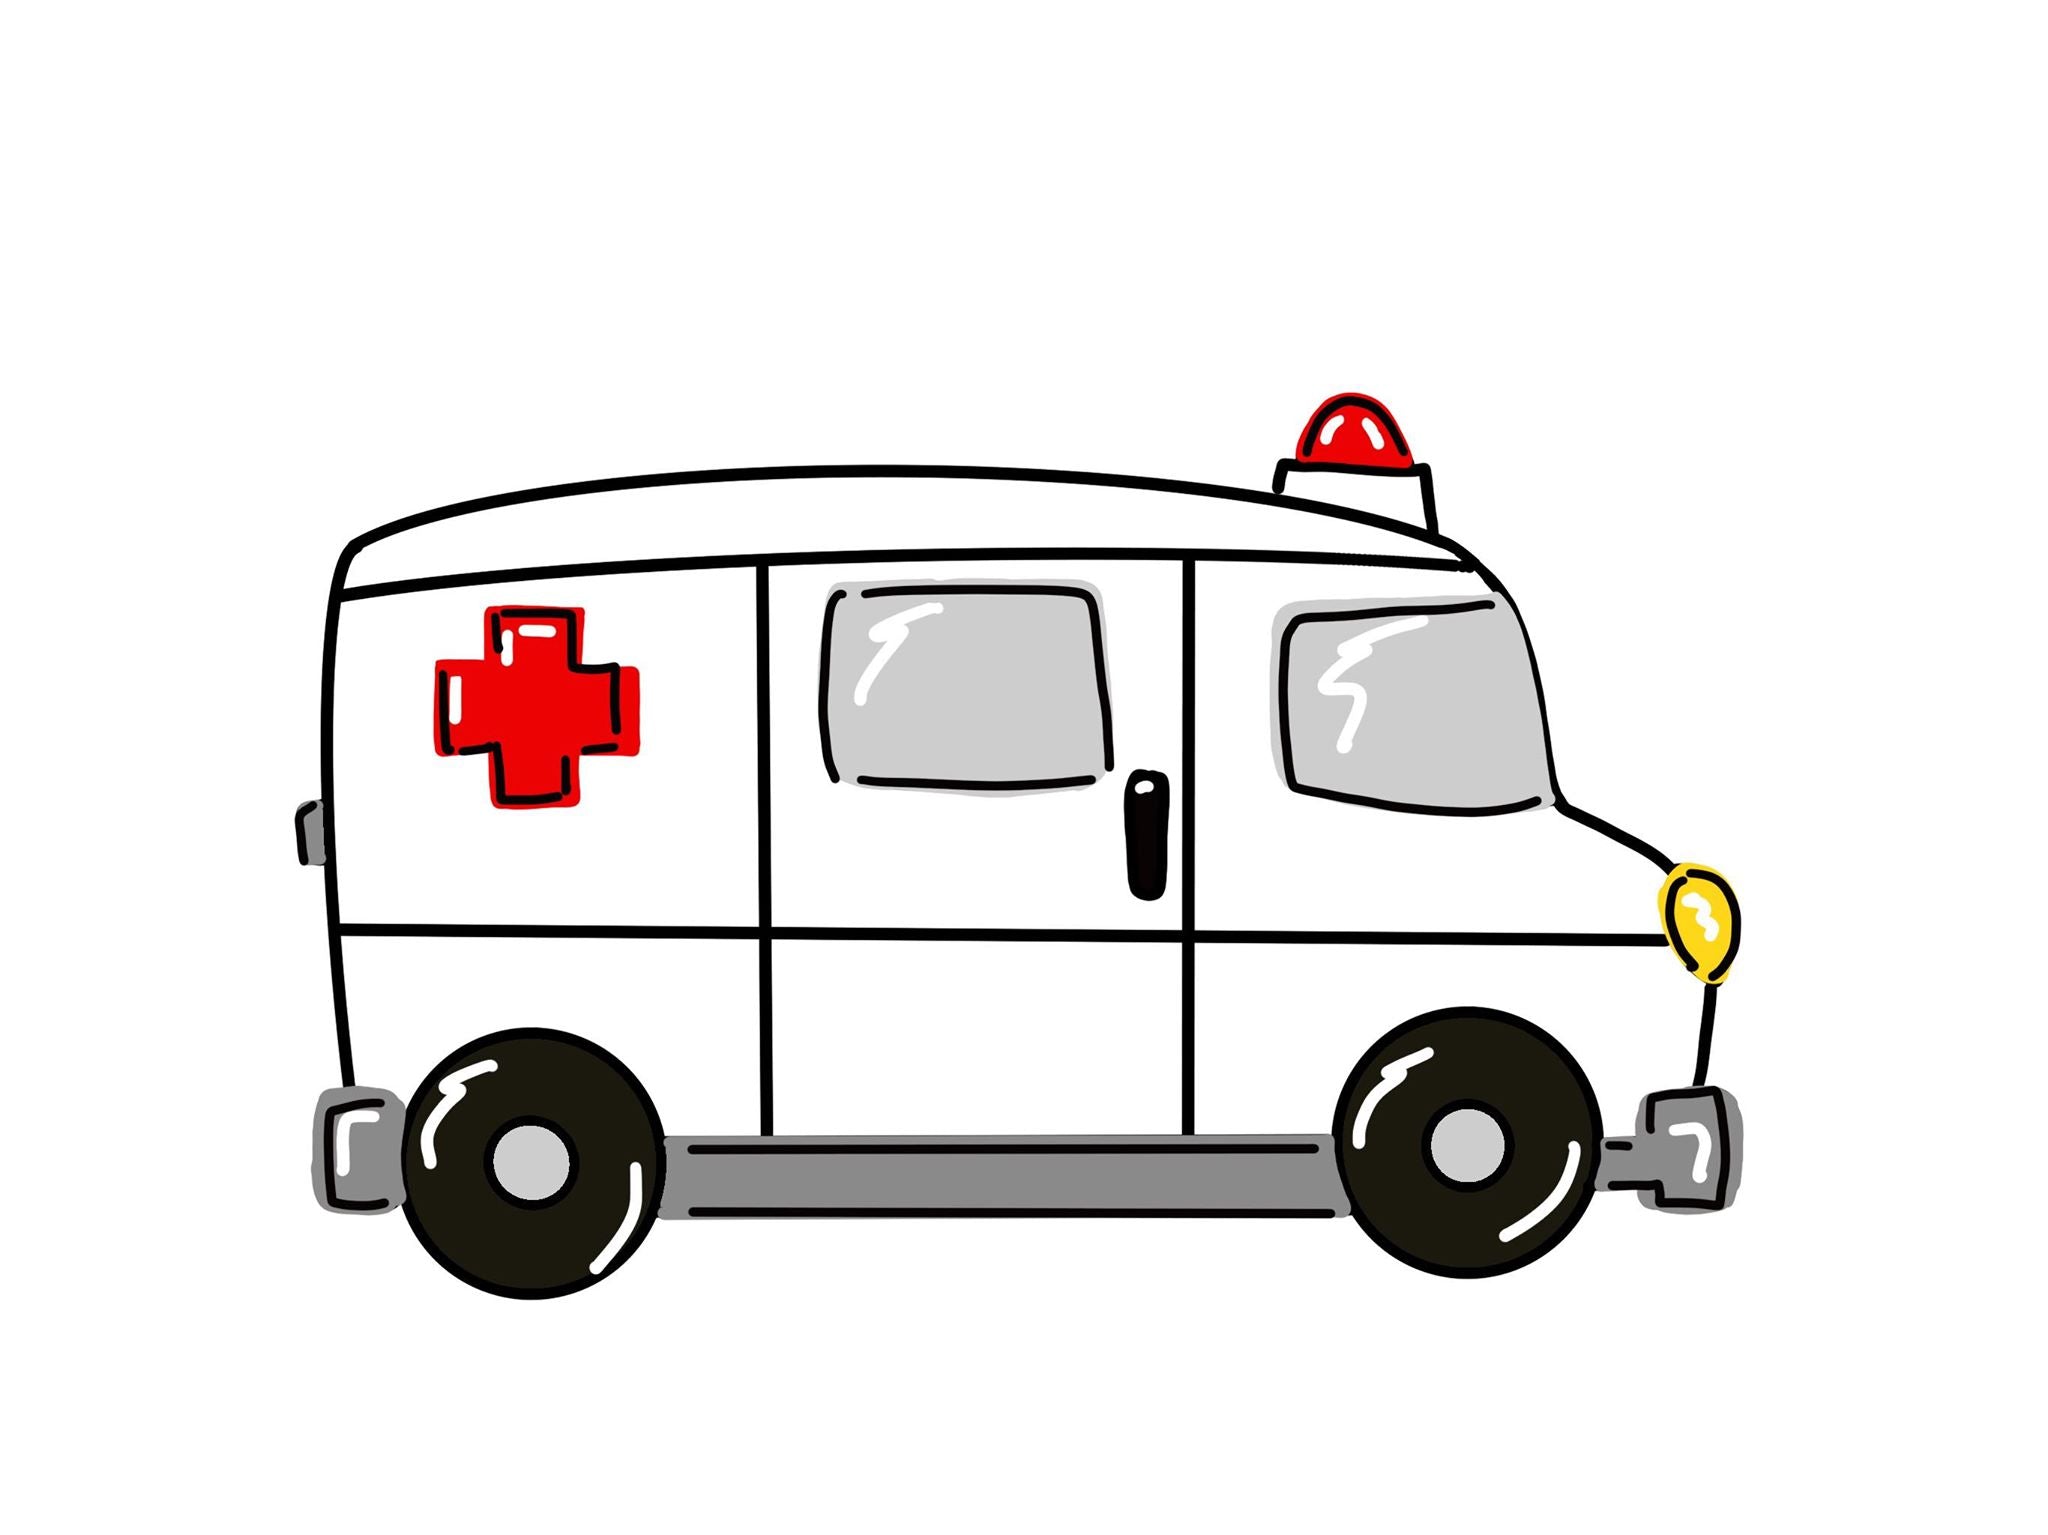 Ambulance Template & Digital Cut File